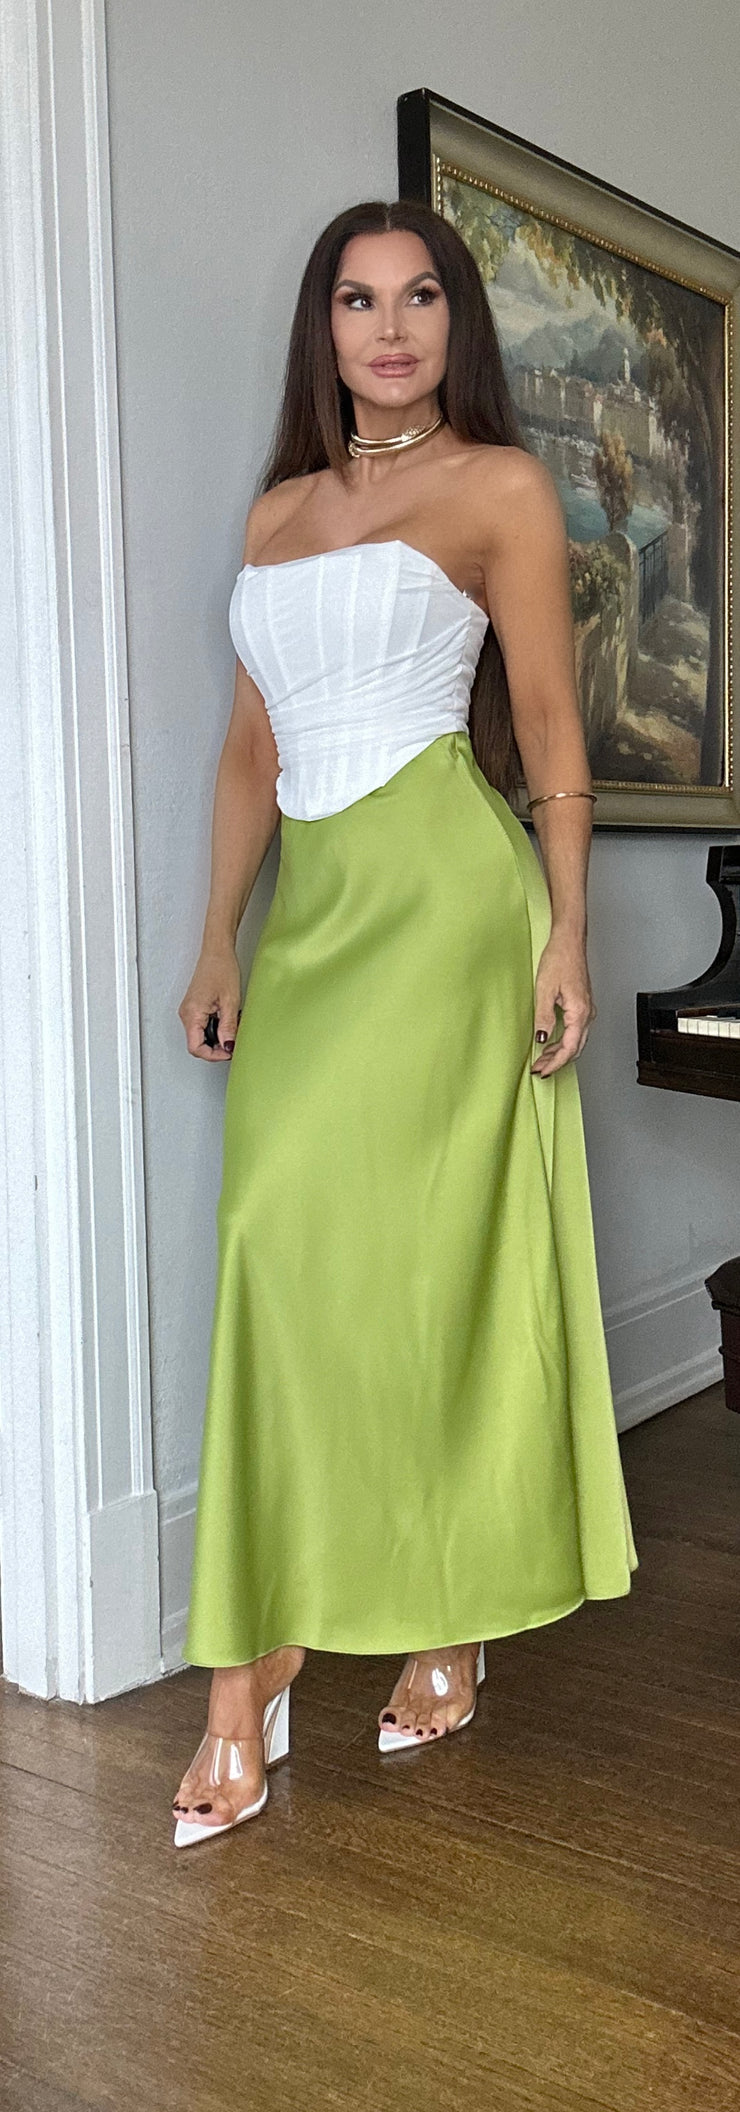 Jillian avocado green "A" line skirt